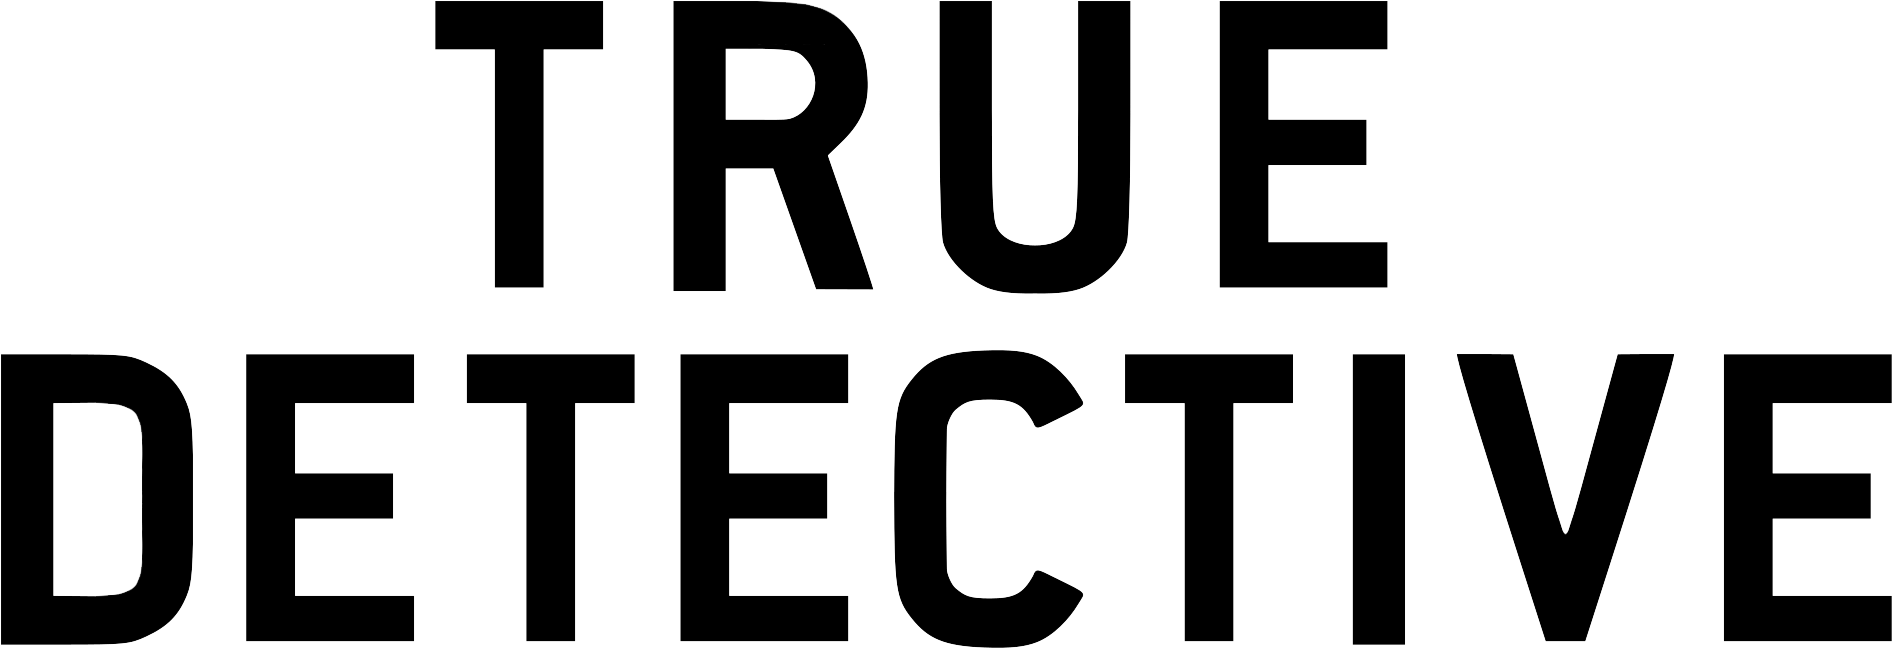 True Detective Logo PNG image